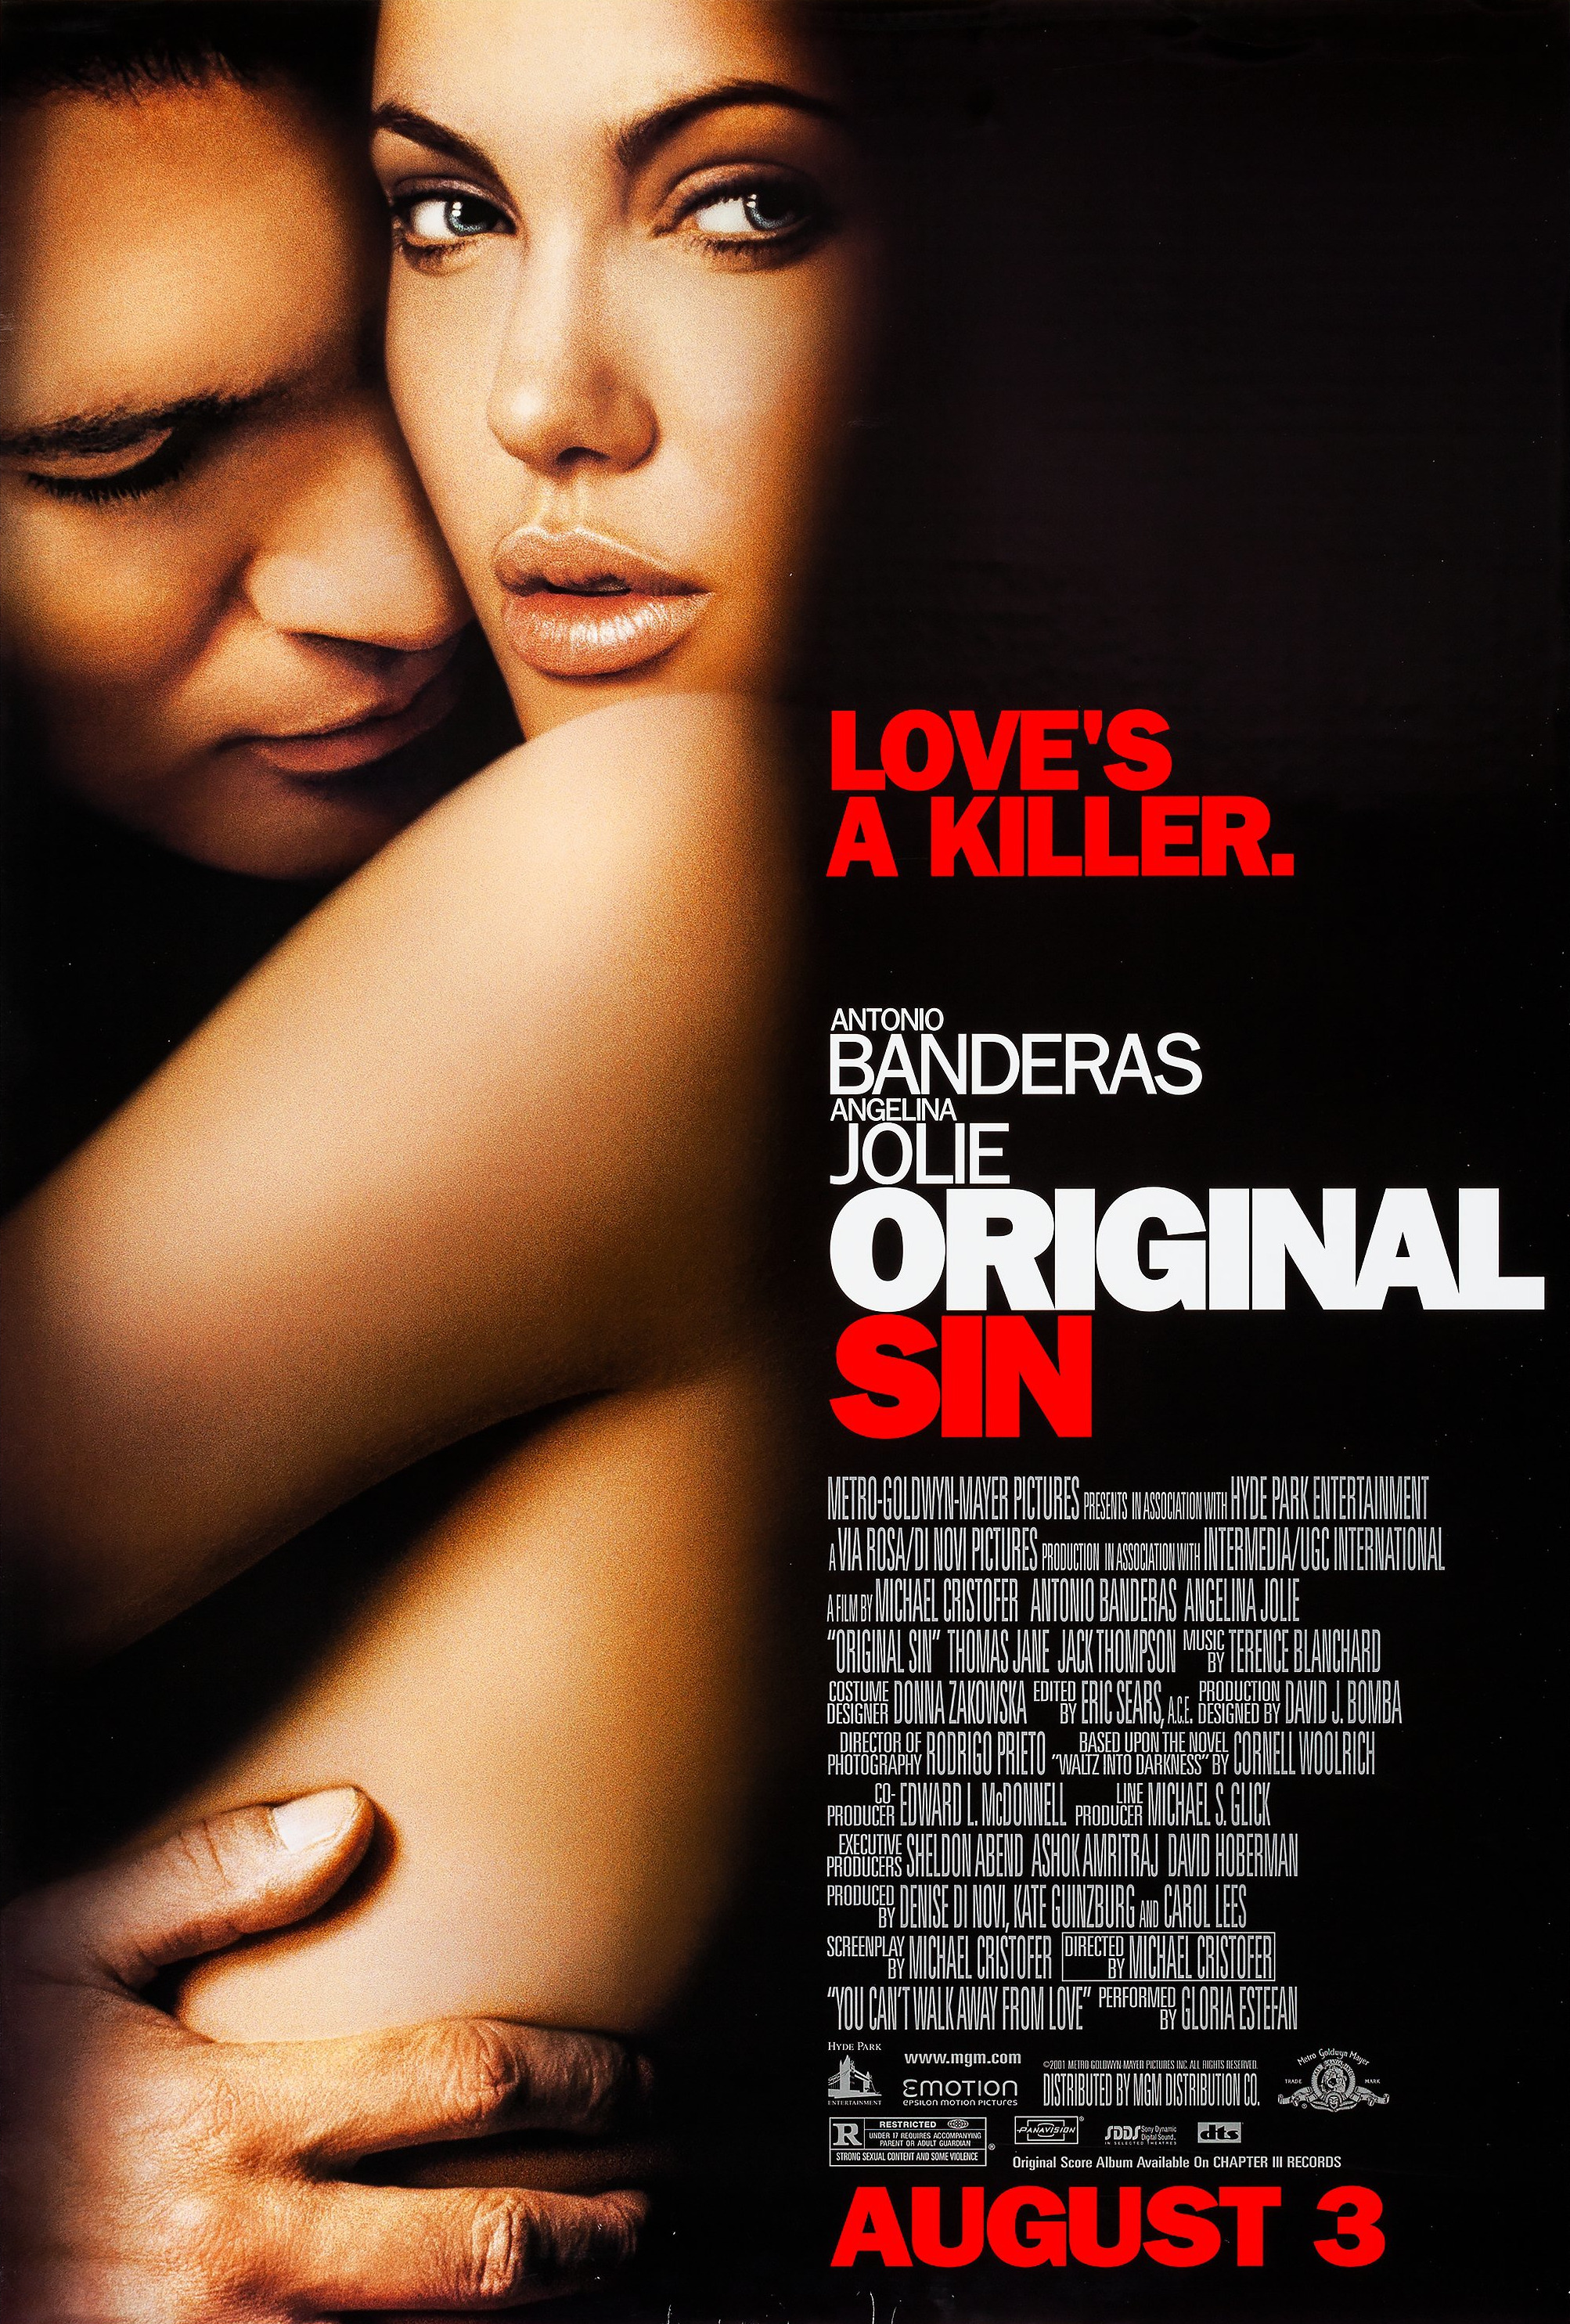 Mega Sized Movie Poster Image for Original Sin (#2 of 2)